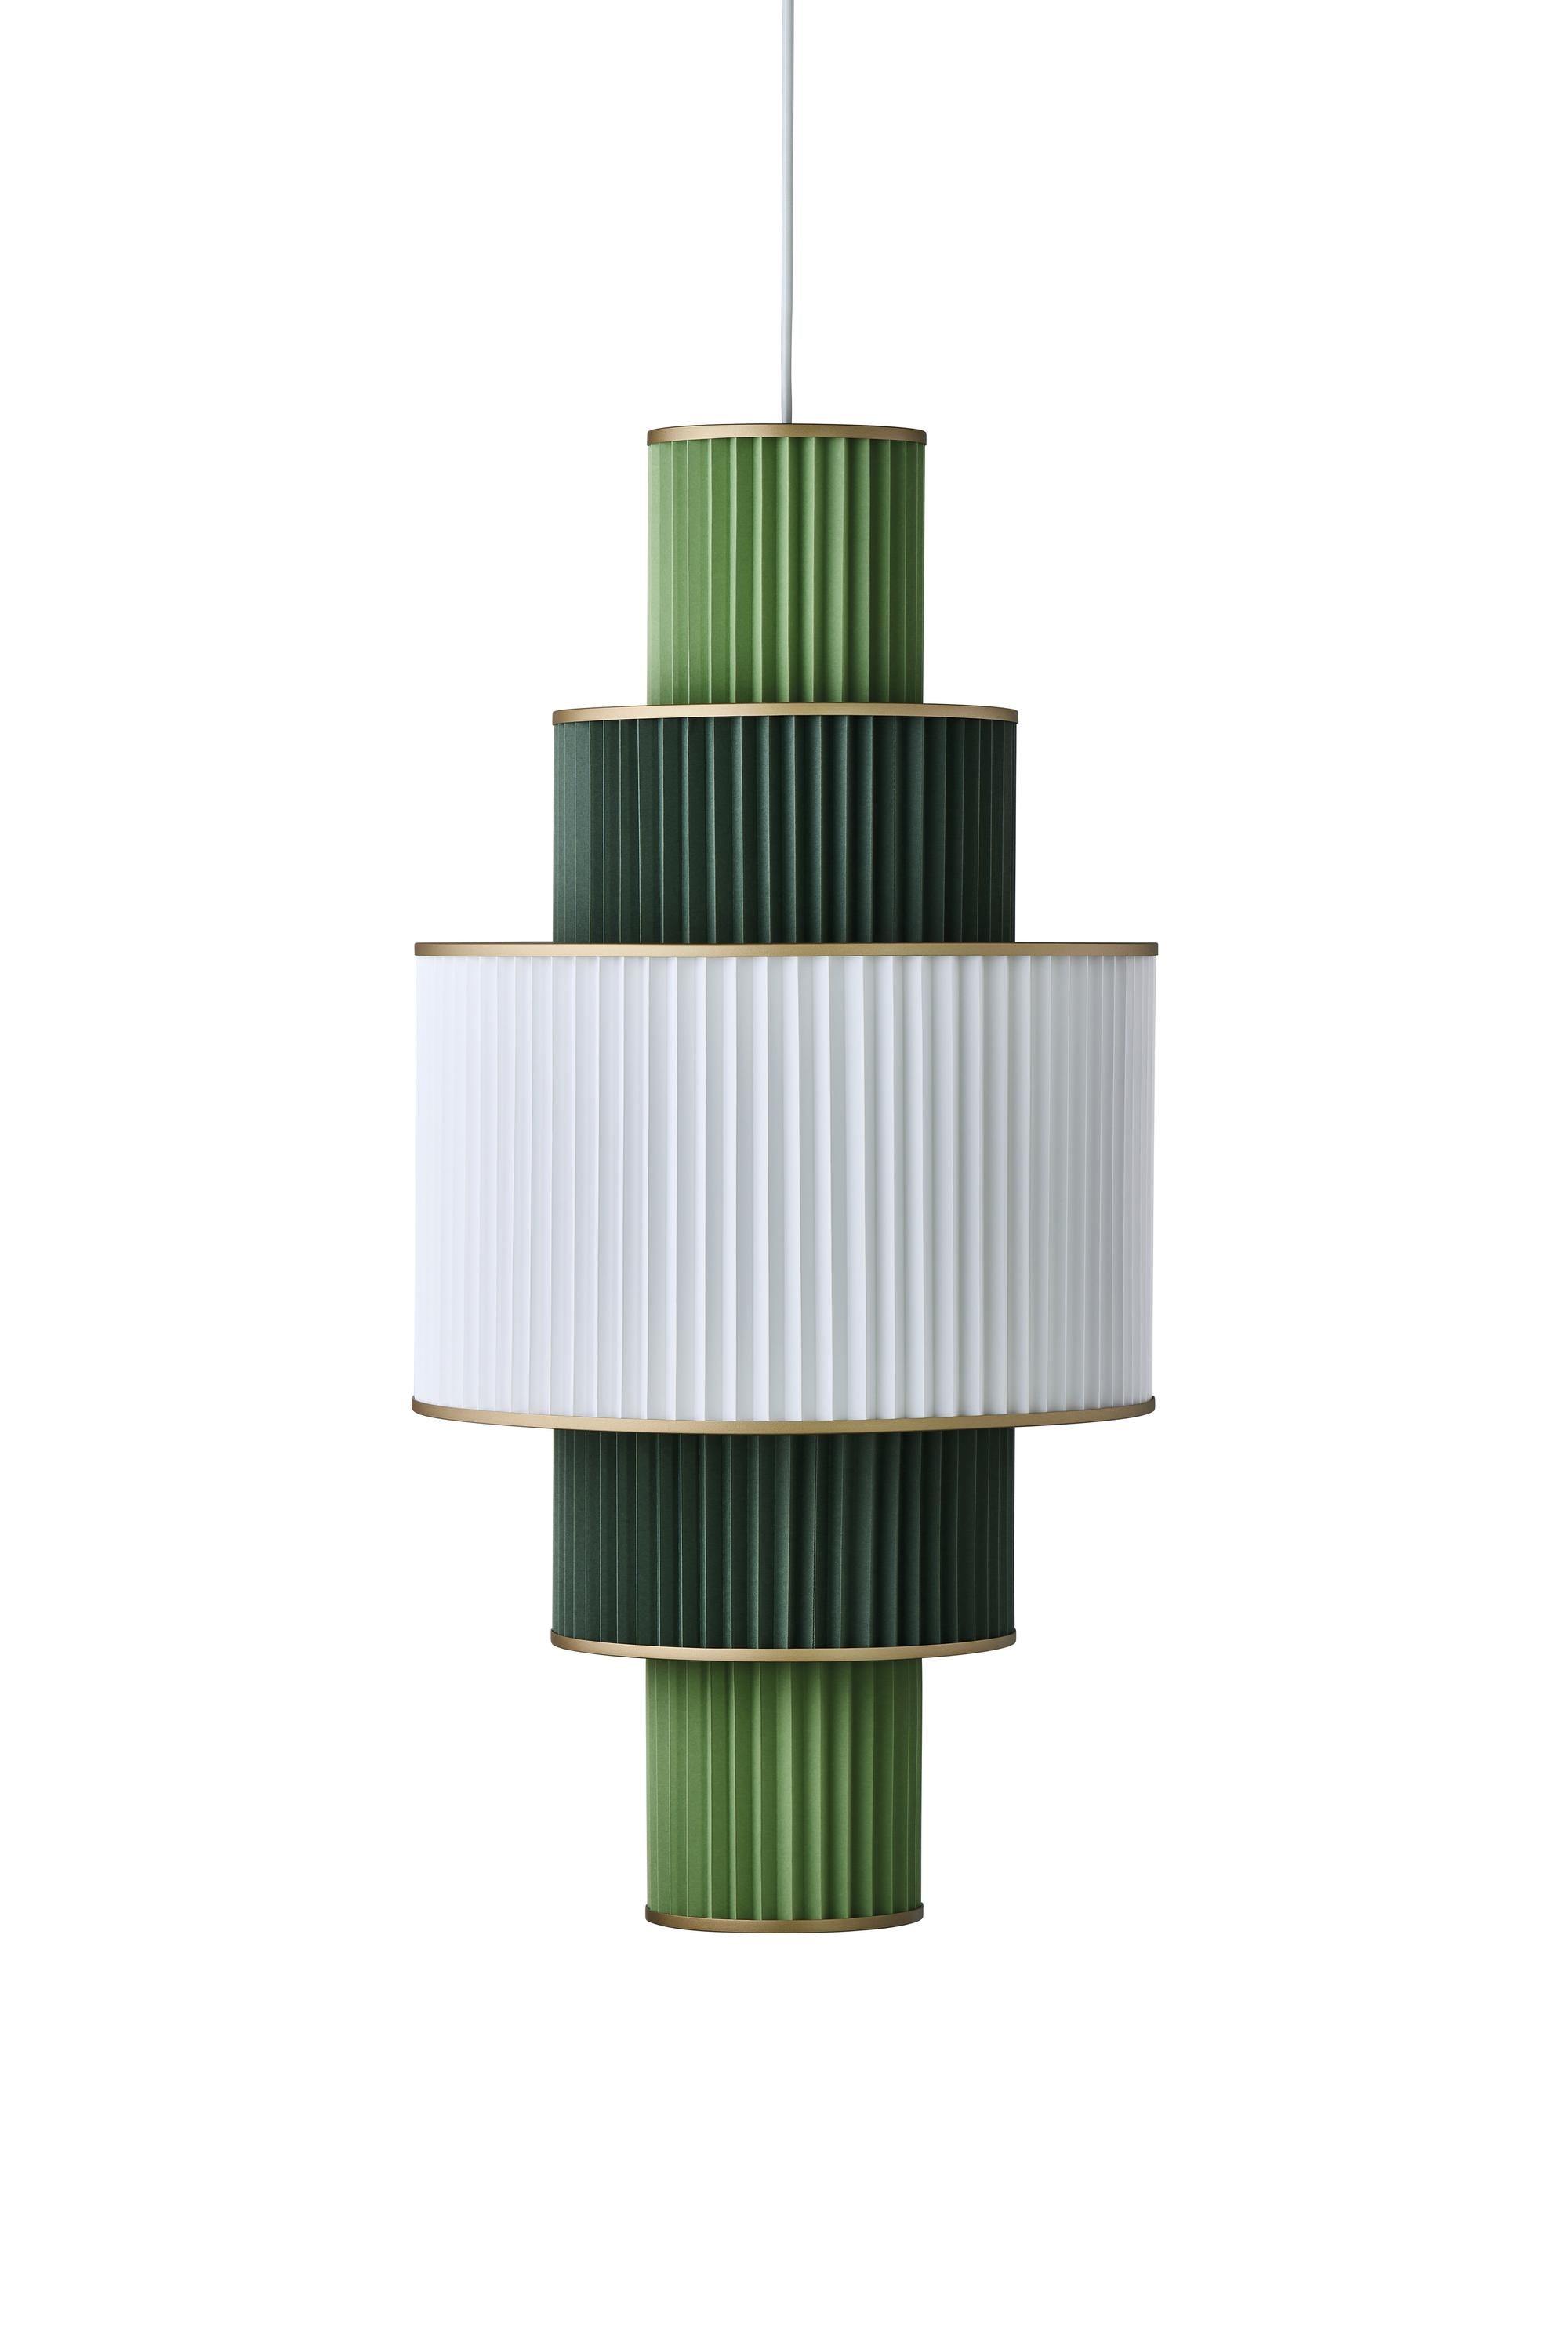 Le Klint Plivello Suspension Lamp Golden/White/Light Green With 5 Shades (S M L M S)